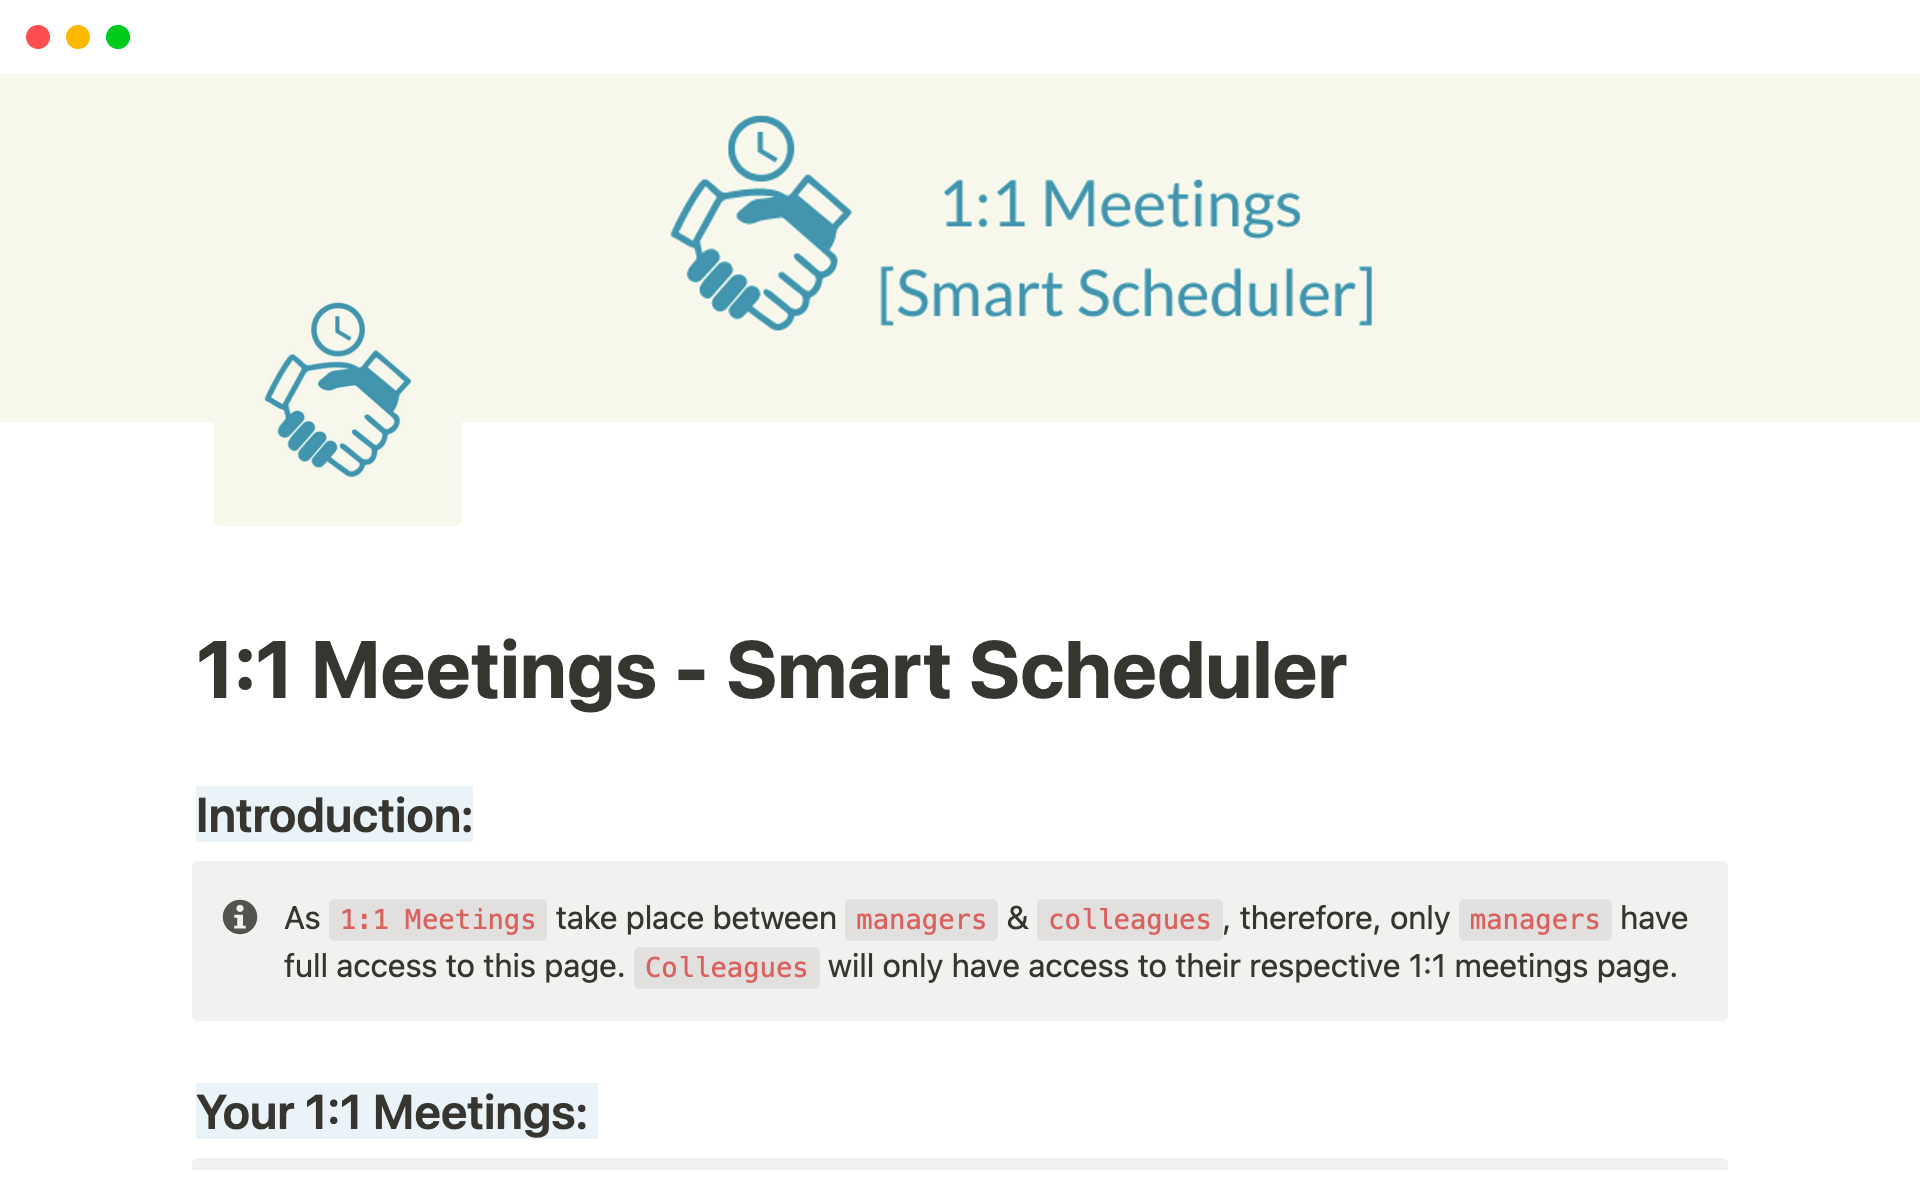 1:1 Meetings - Smart Scheduler님의 템플릿 미리보기